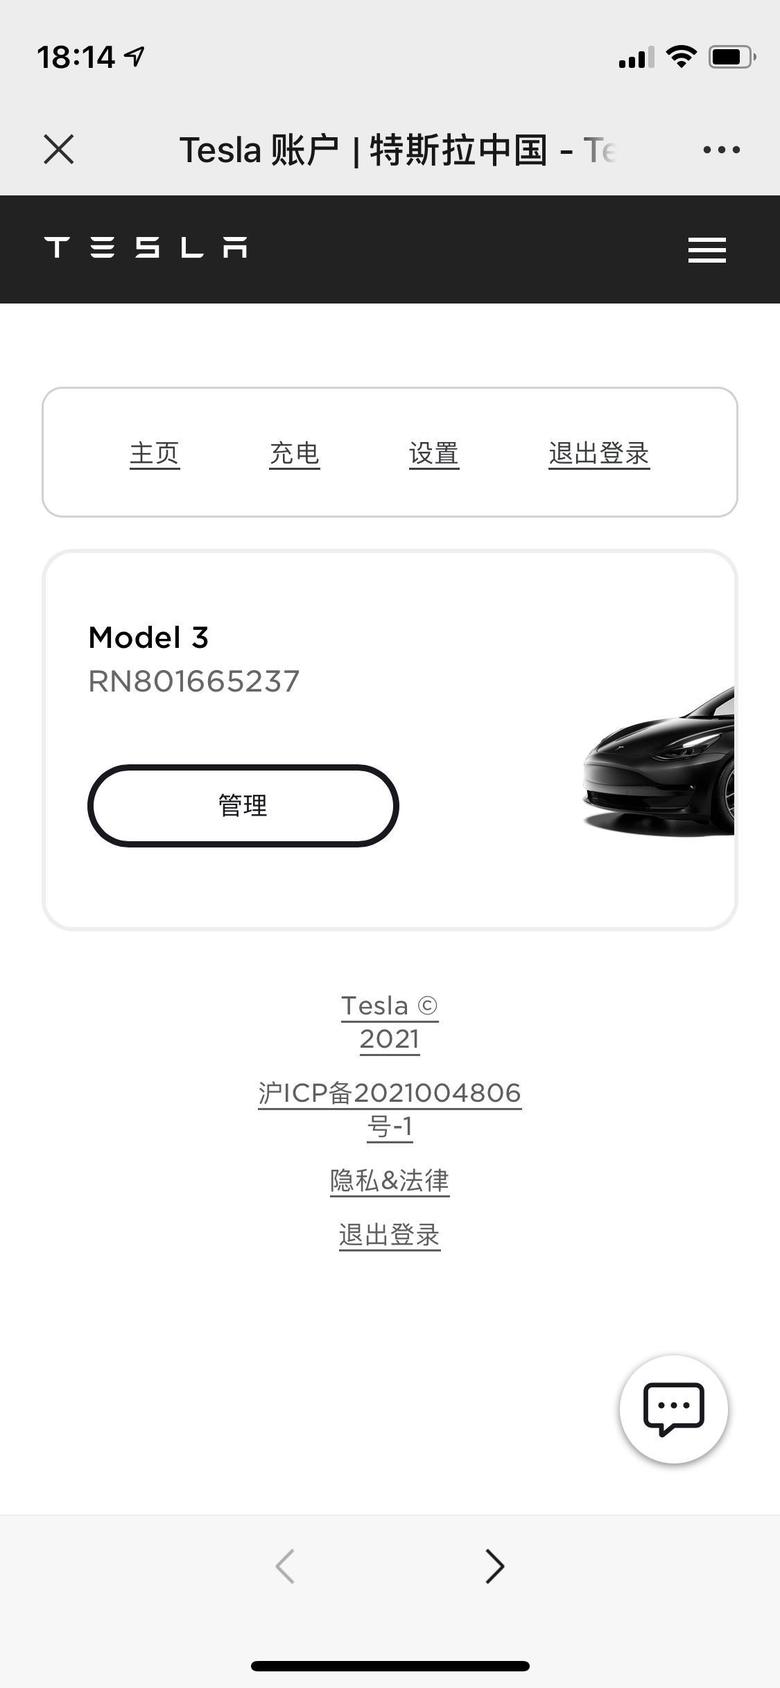 model 3 有没有杭州的等待车友，近日3p有提车的订单到几号啦？希望分享一下，感谢